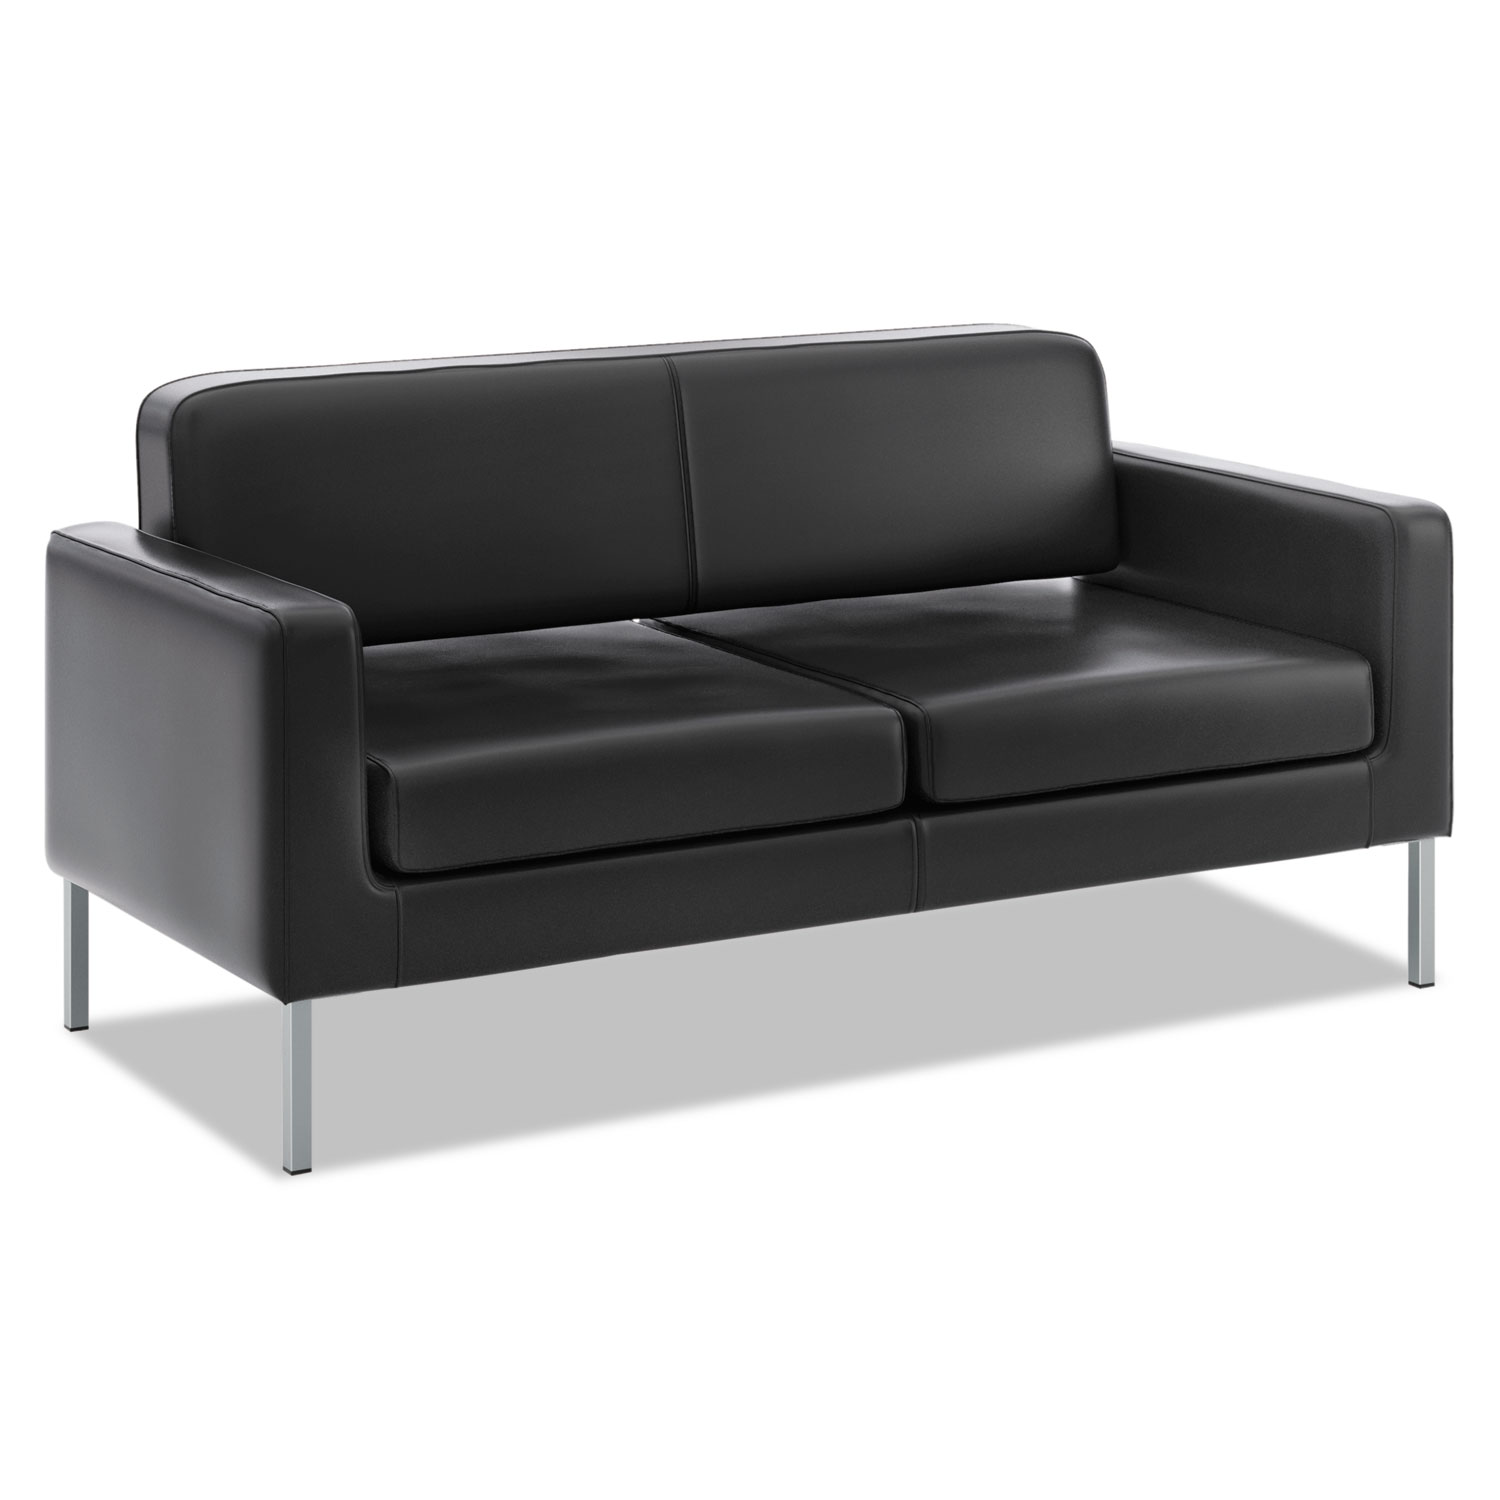  HON HVL888.SB11 Corral Reception Seating Sofa, 67w x 28d x 30.5h, Black SofThread Leather (BSXVL888SB11) 